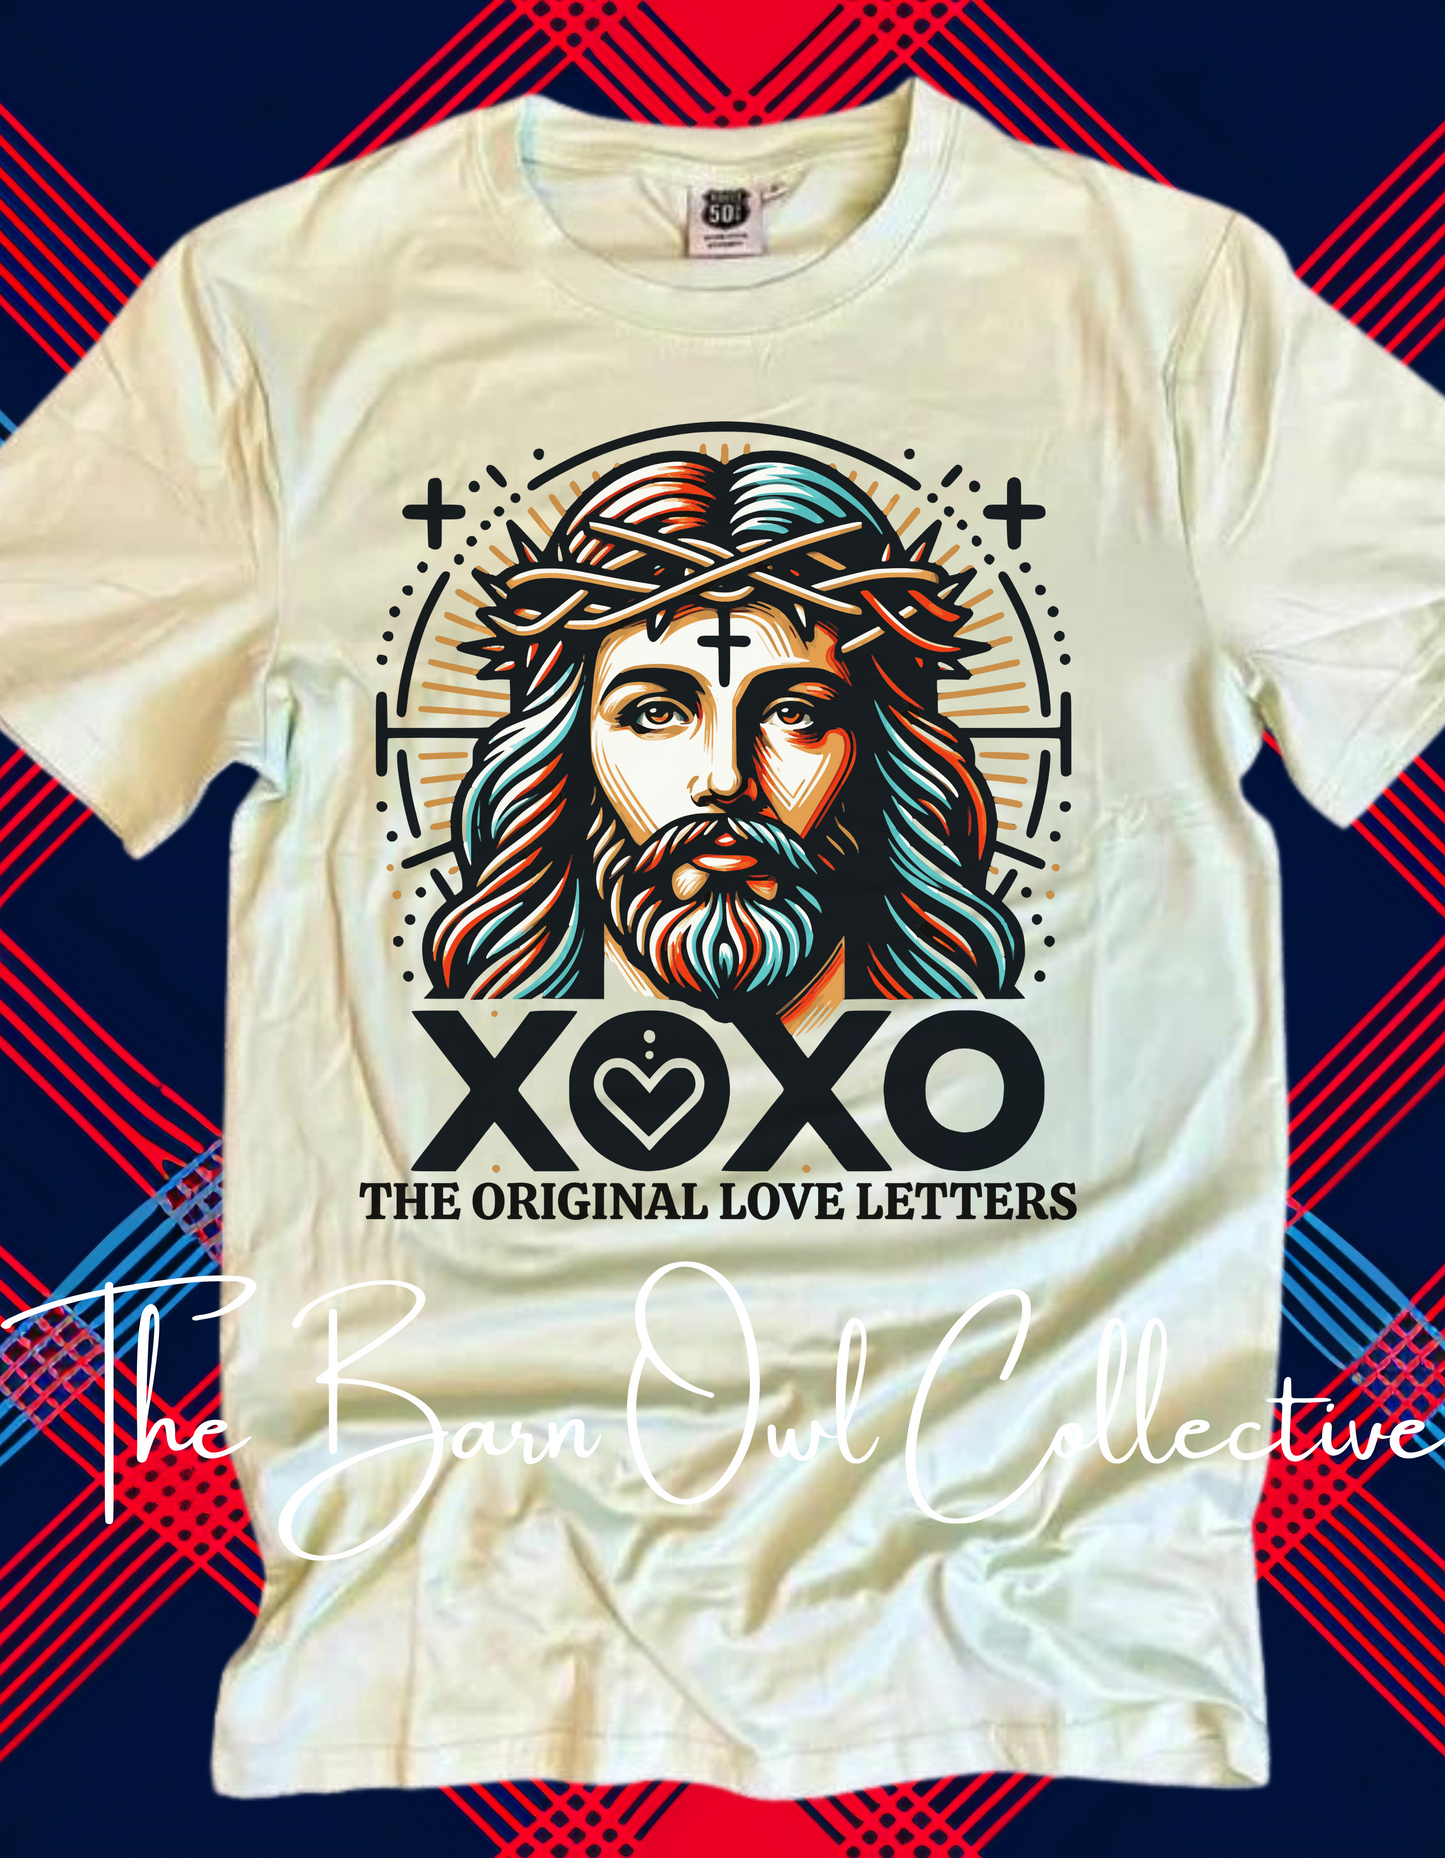 XOXO The Original Love Letters T-Shirt